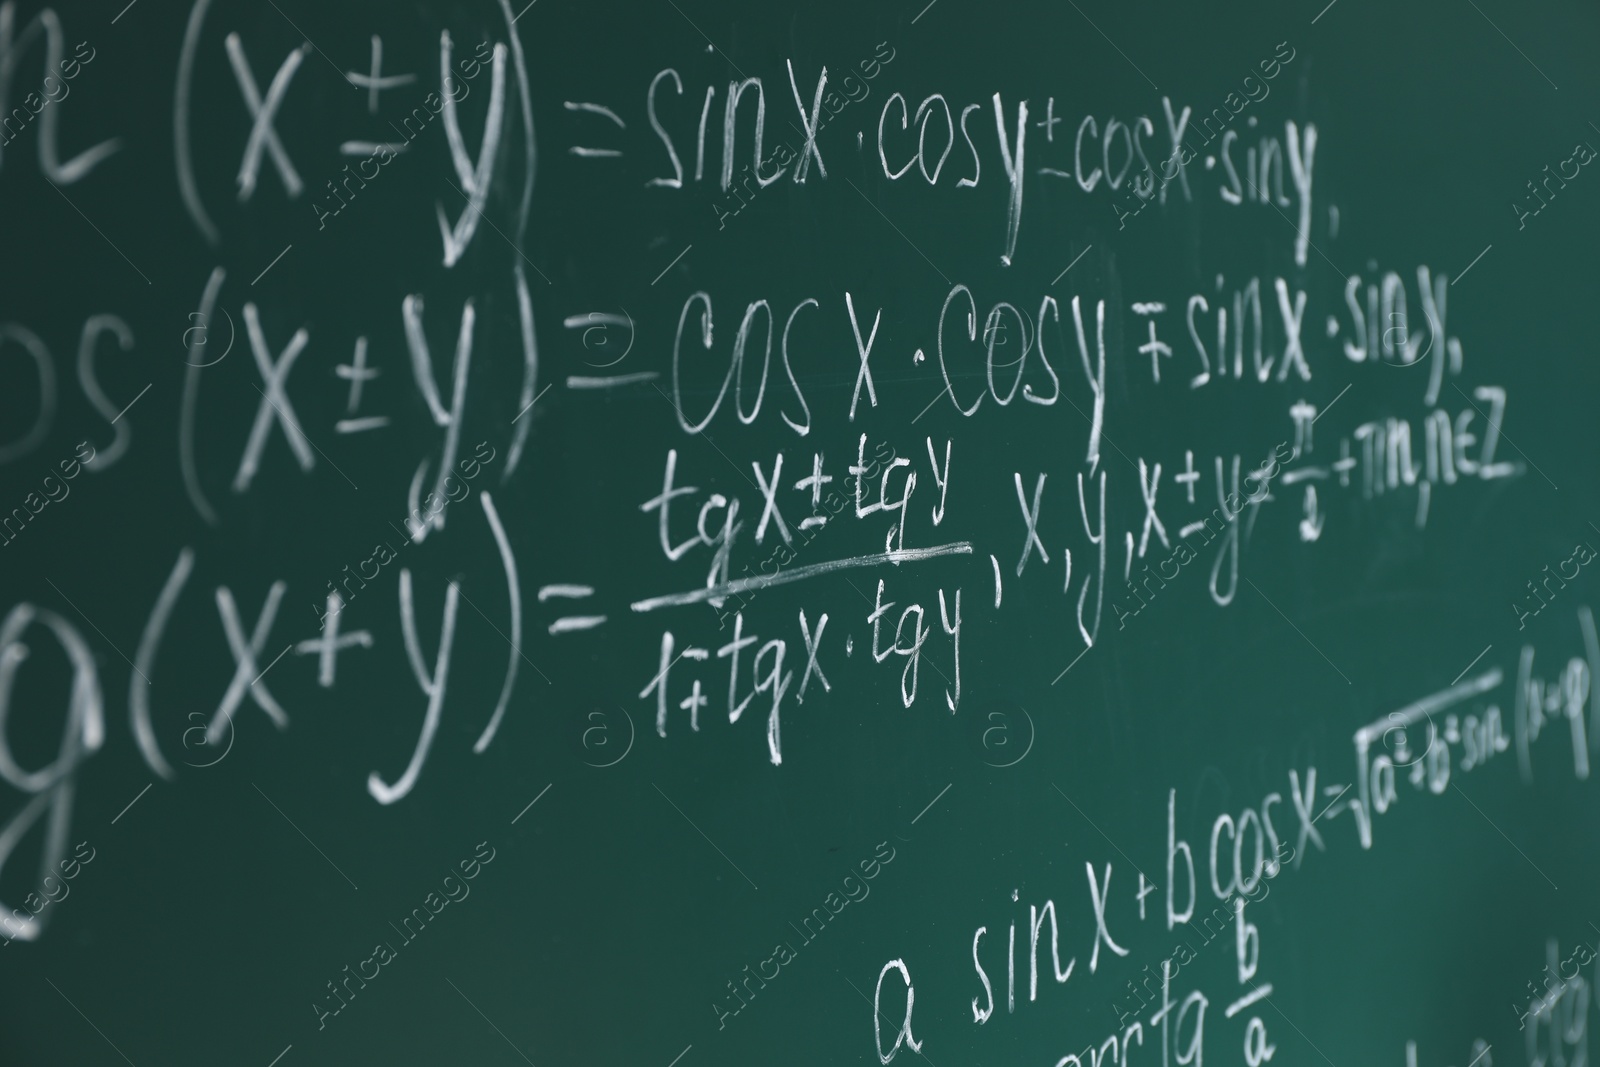 Photo of Many different math formulas written on chalkboard